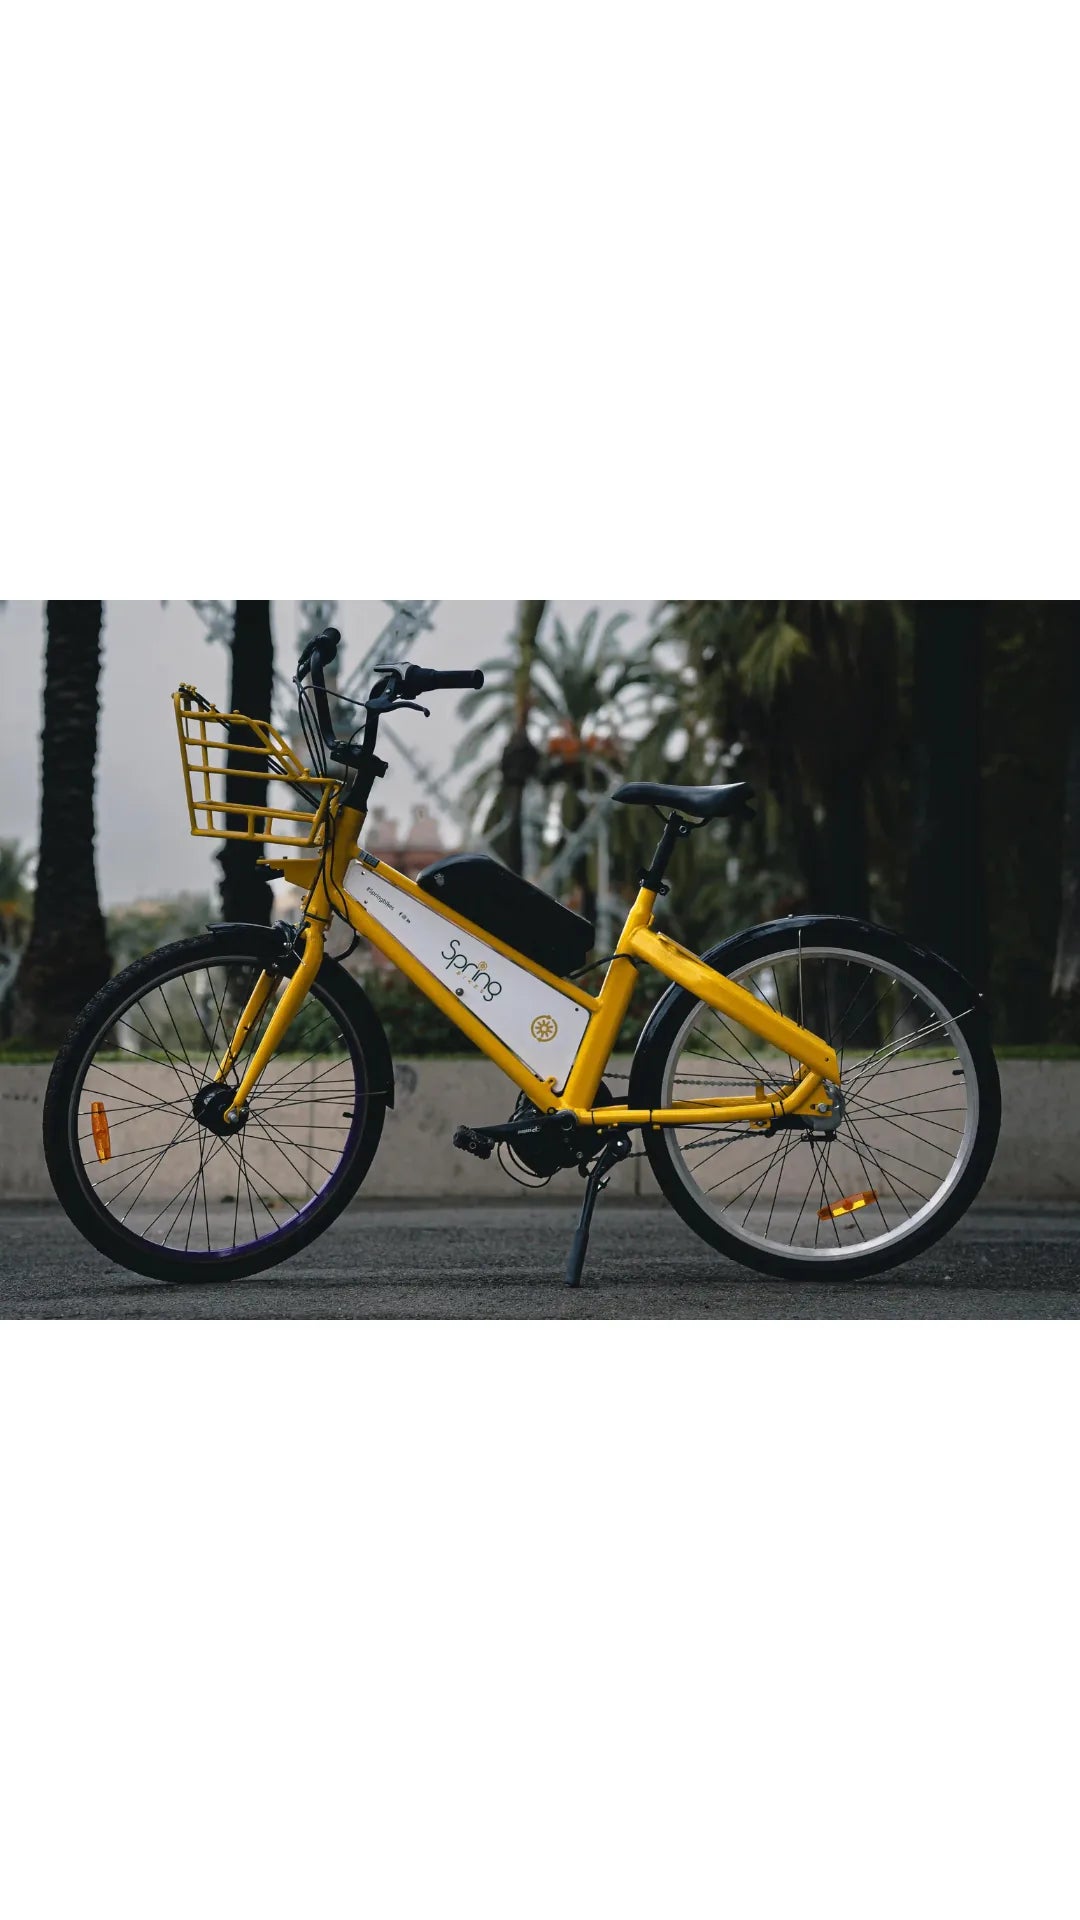 Bicicleta eléctrica urbana personalizable modelo Spring city